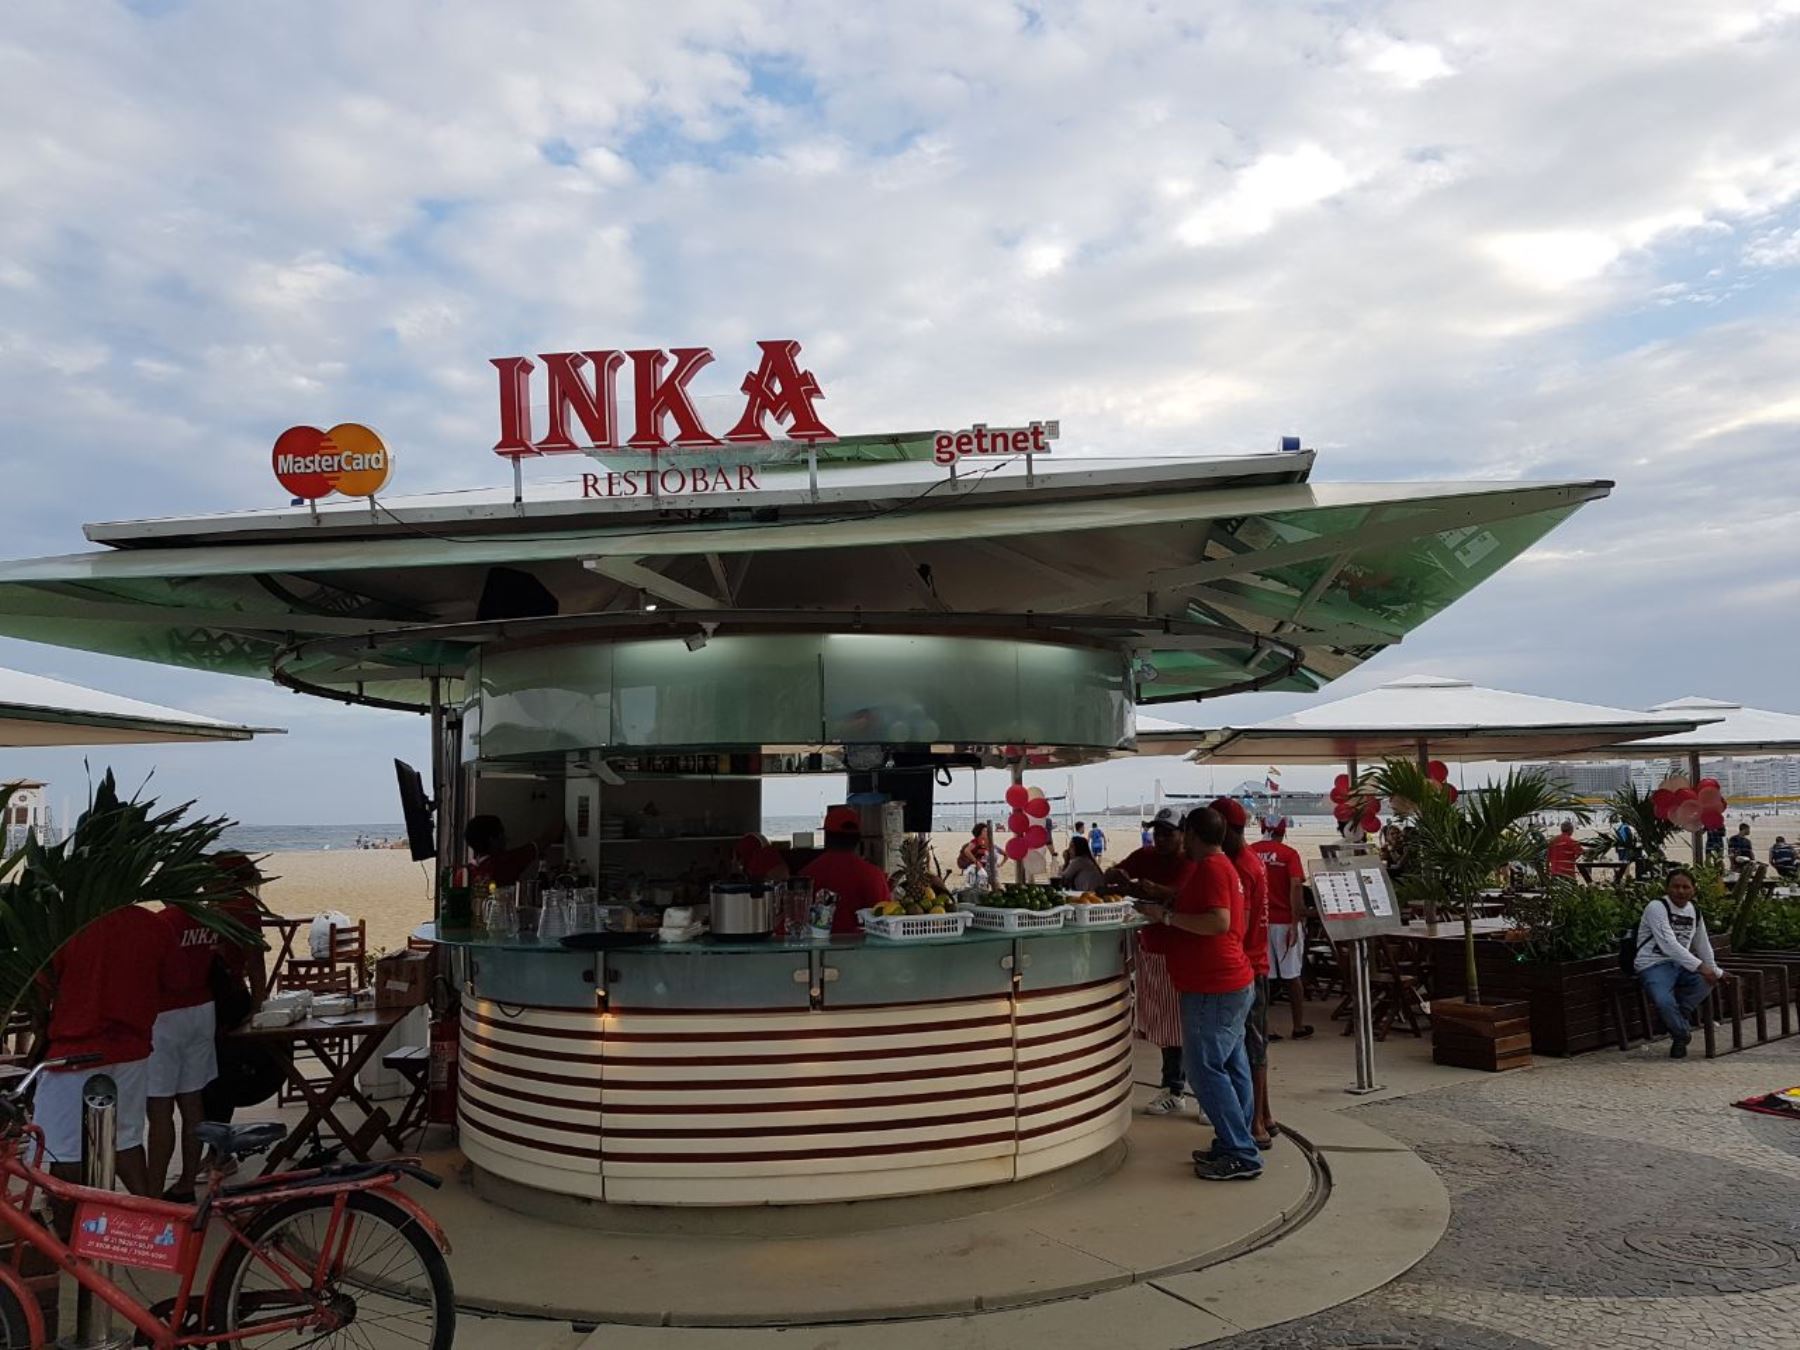 Inka Restobar: First Peruvian restaurant at Brazilian beach | Noticias